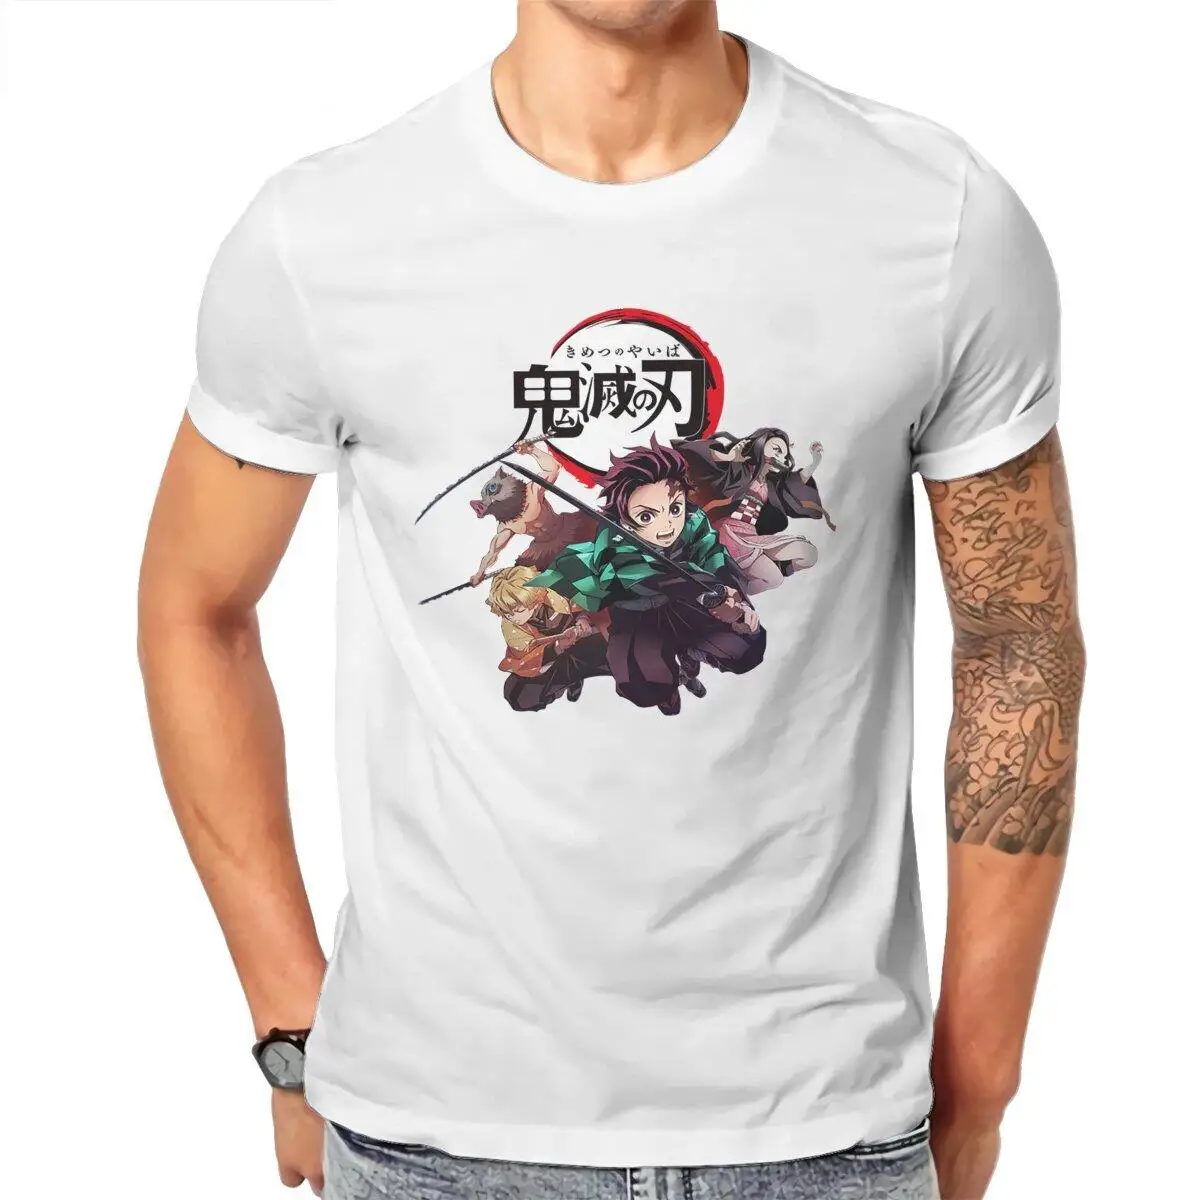 Hipster Anime Demon Slayer  T-Shirts for Men Pure Cotton T Shirt Japanese Kimetsu No Yaiba Tee Shirt Gift Idea Clothes